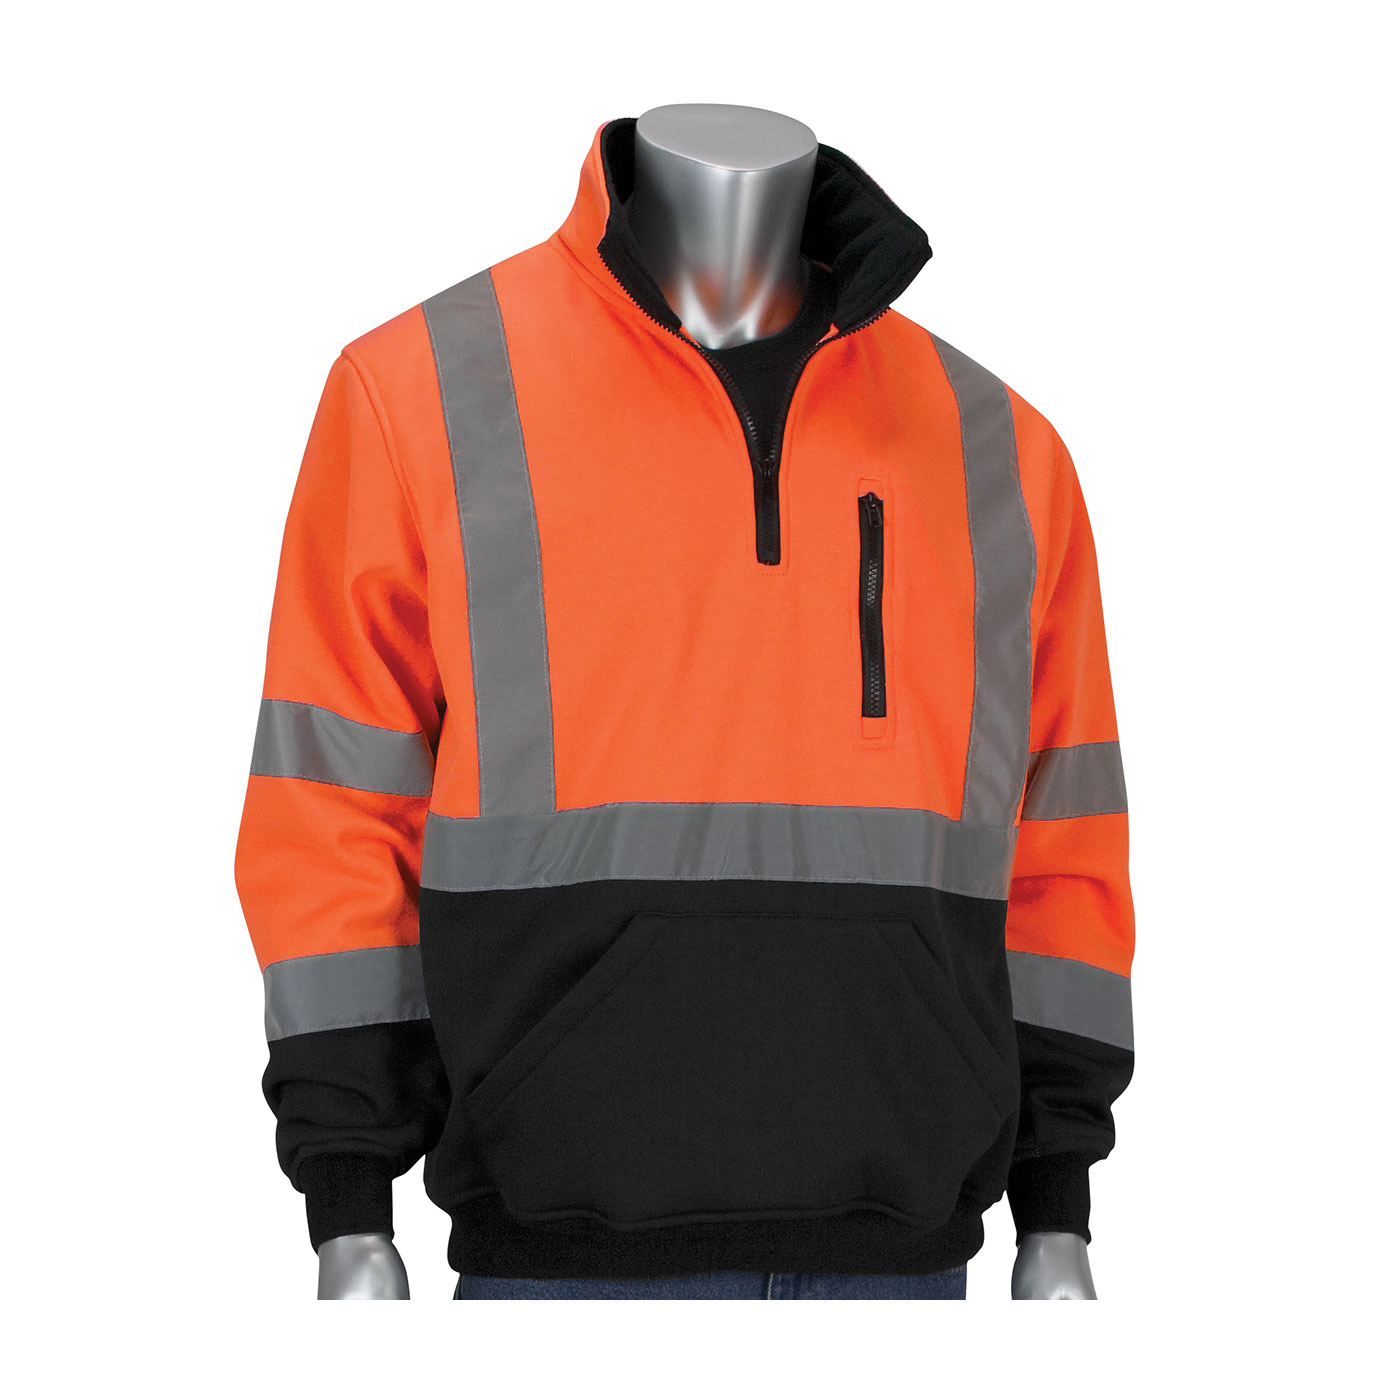 PIP® 323-1330B-OR/4X Sweatshirt With Black Bottom, Unisex, 4XL, Orange, 33.1 in L, Polyester Fleece